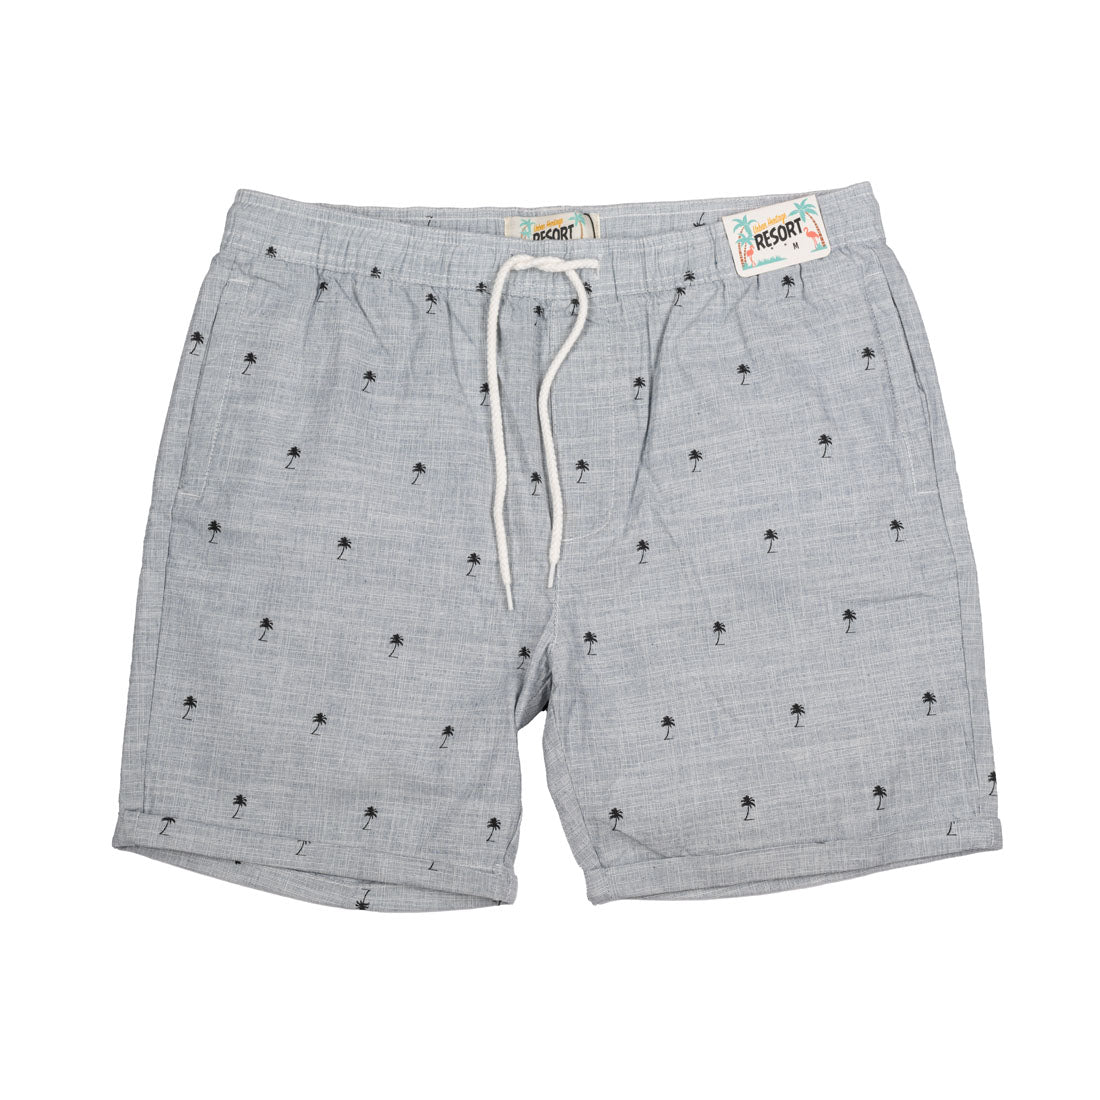 Resort Brand New Shorts For Men - mymadstore.com